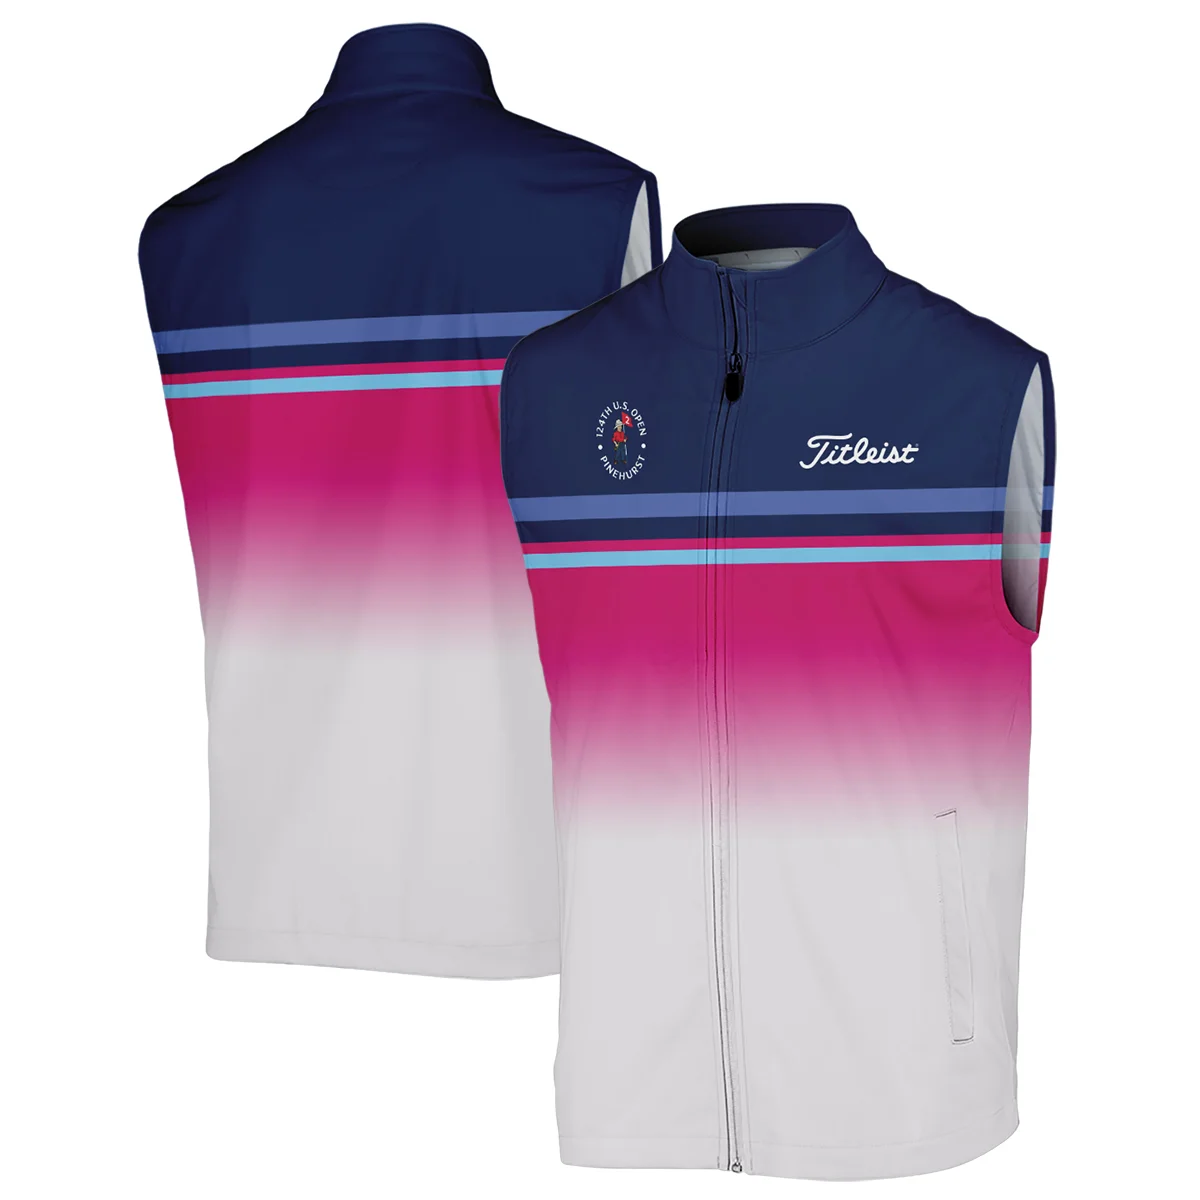 Sport Titleist 124th U.S. Open Pinehurst Unisex Sweatshirt White Strong Pink Very Dark Blue Pattern  All Over Print Sweatshirt